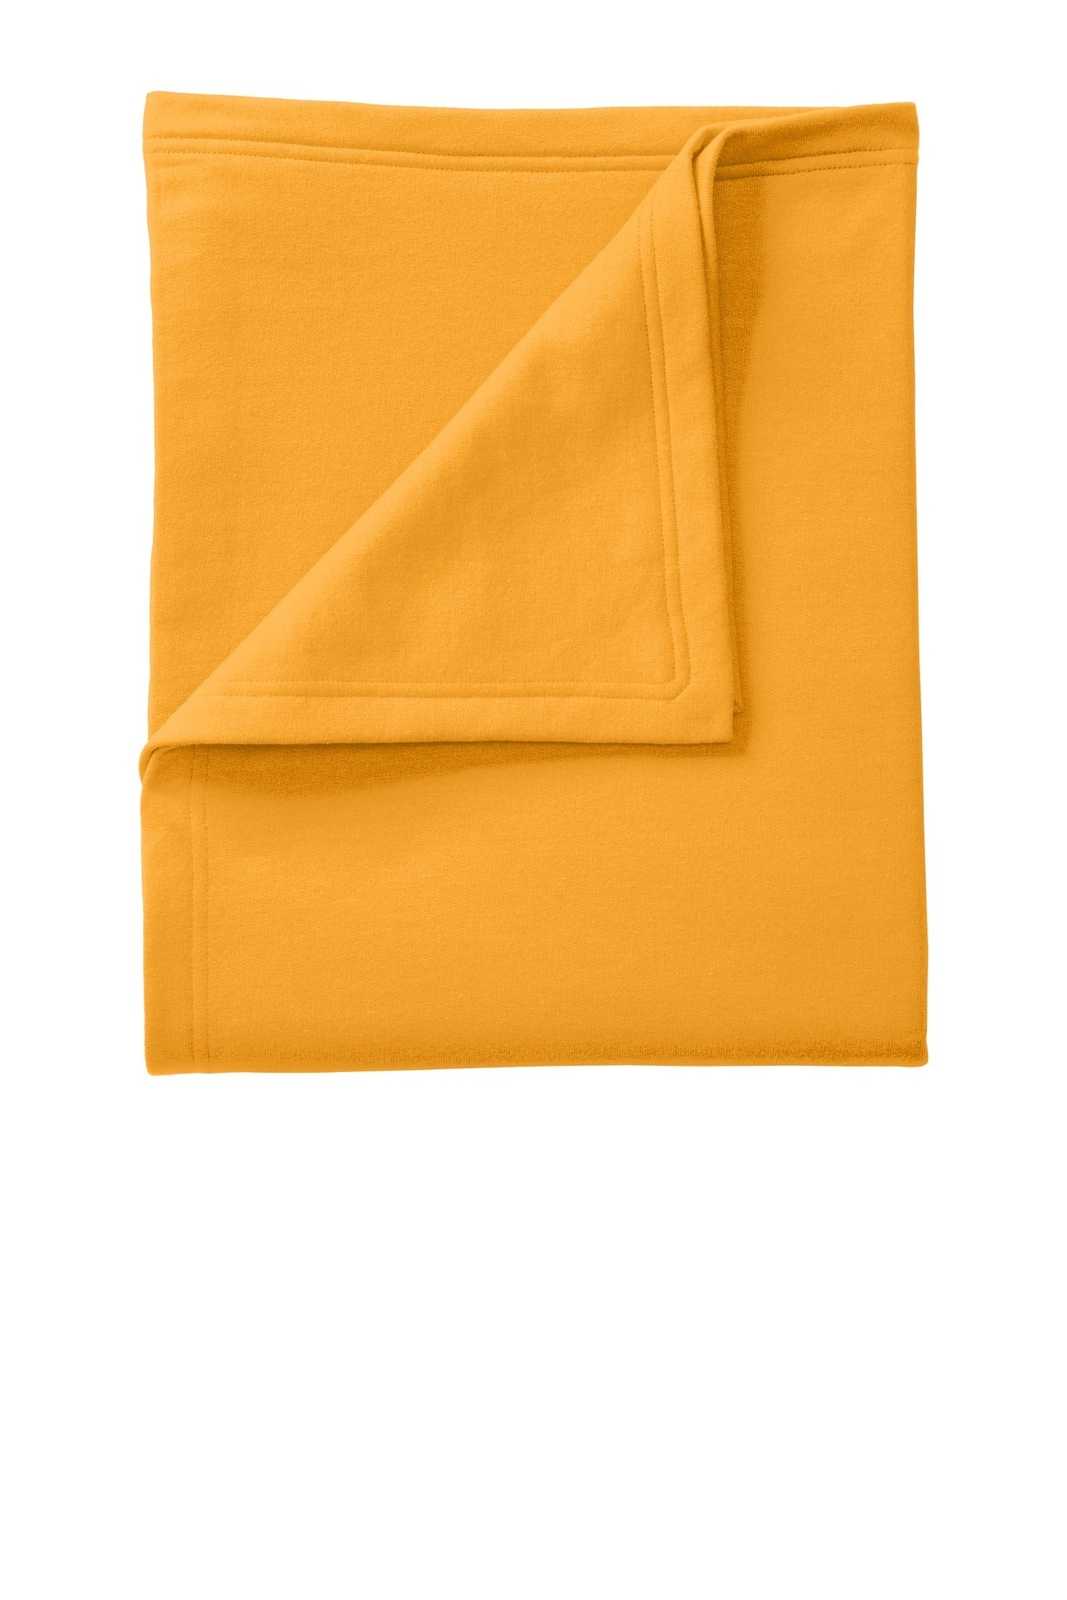 Port & Company BP78 Core Fleece Sweatshirt Blanket - Gold - HIT a Double - 1